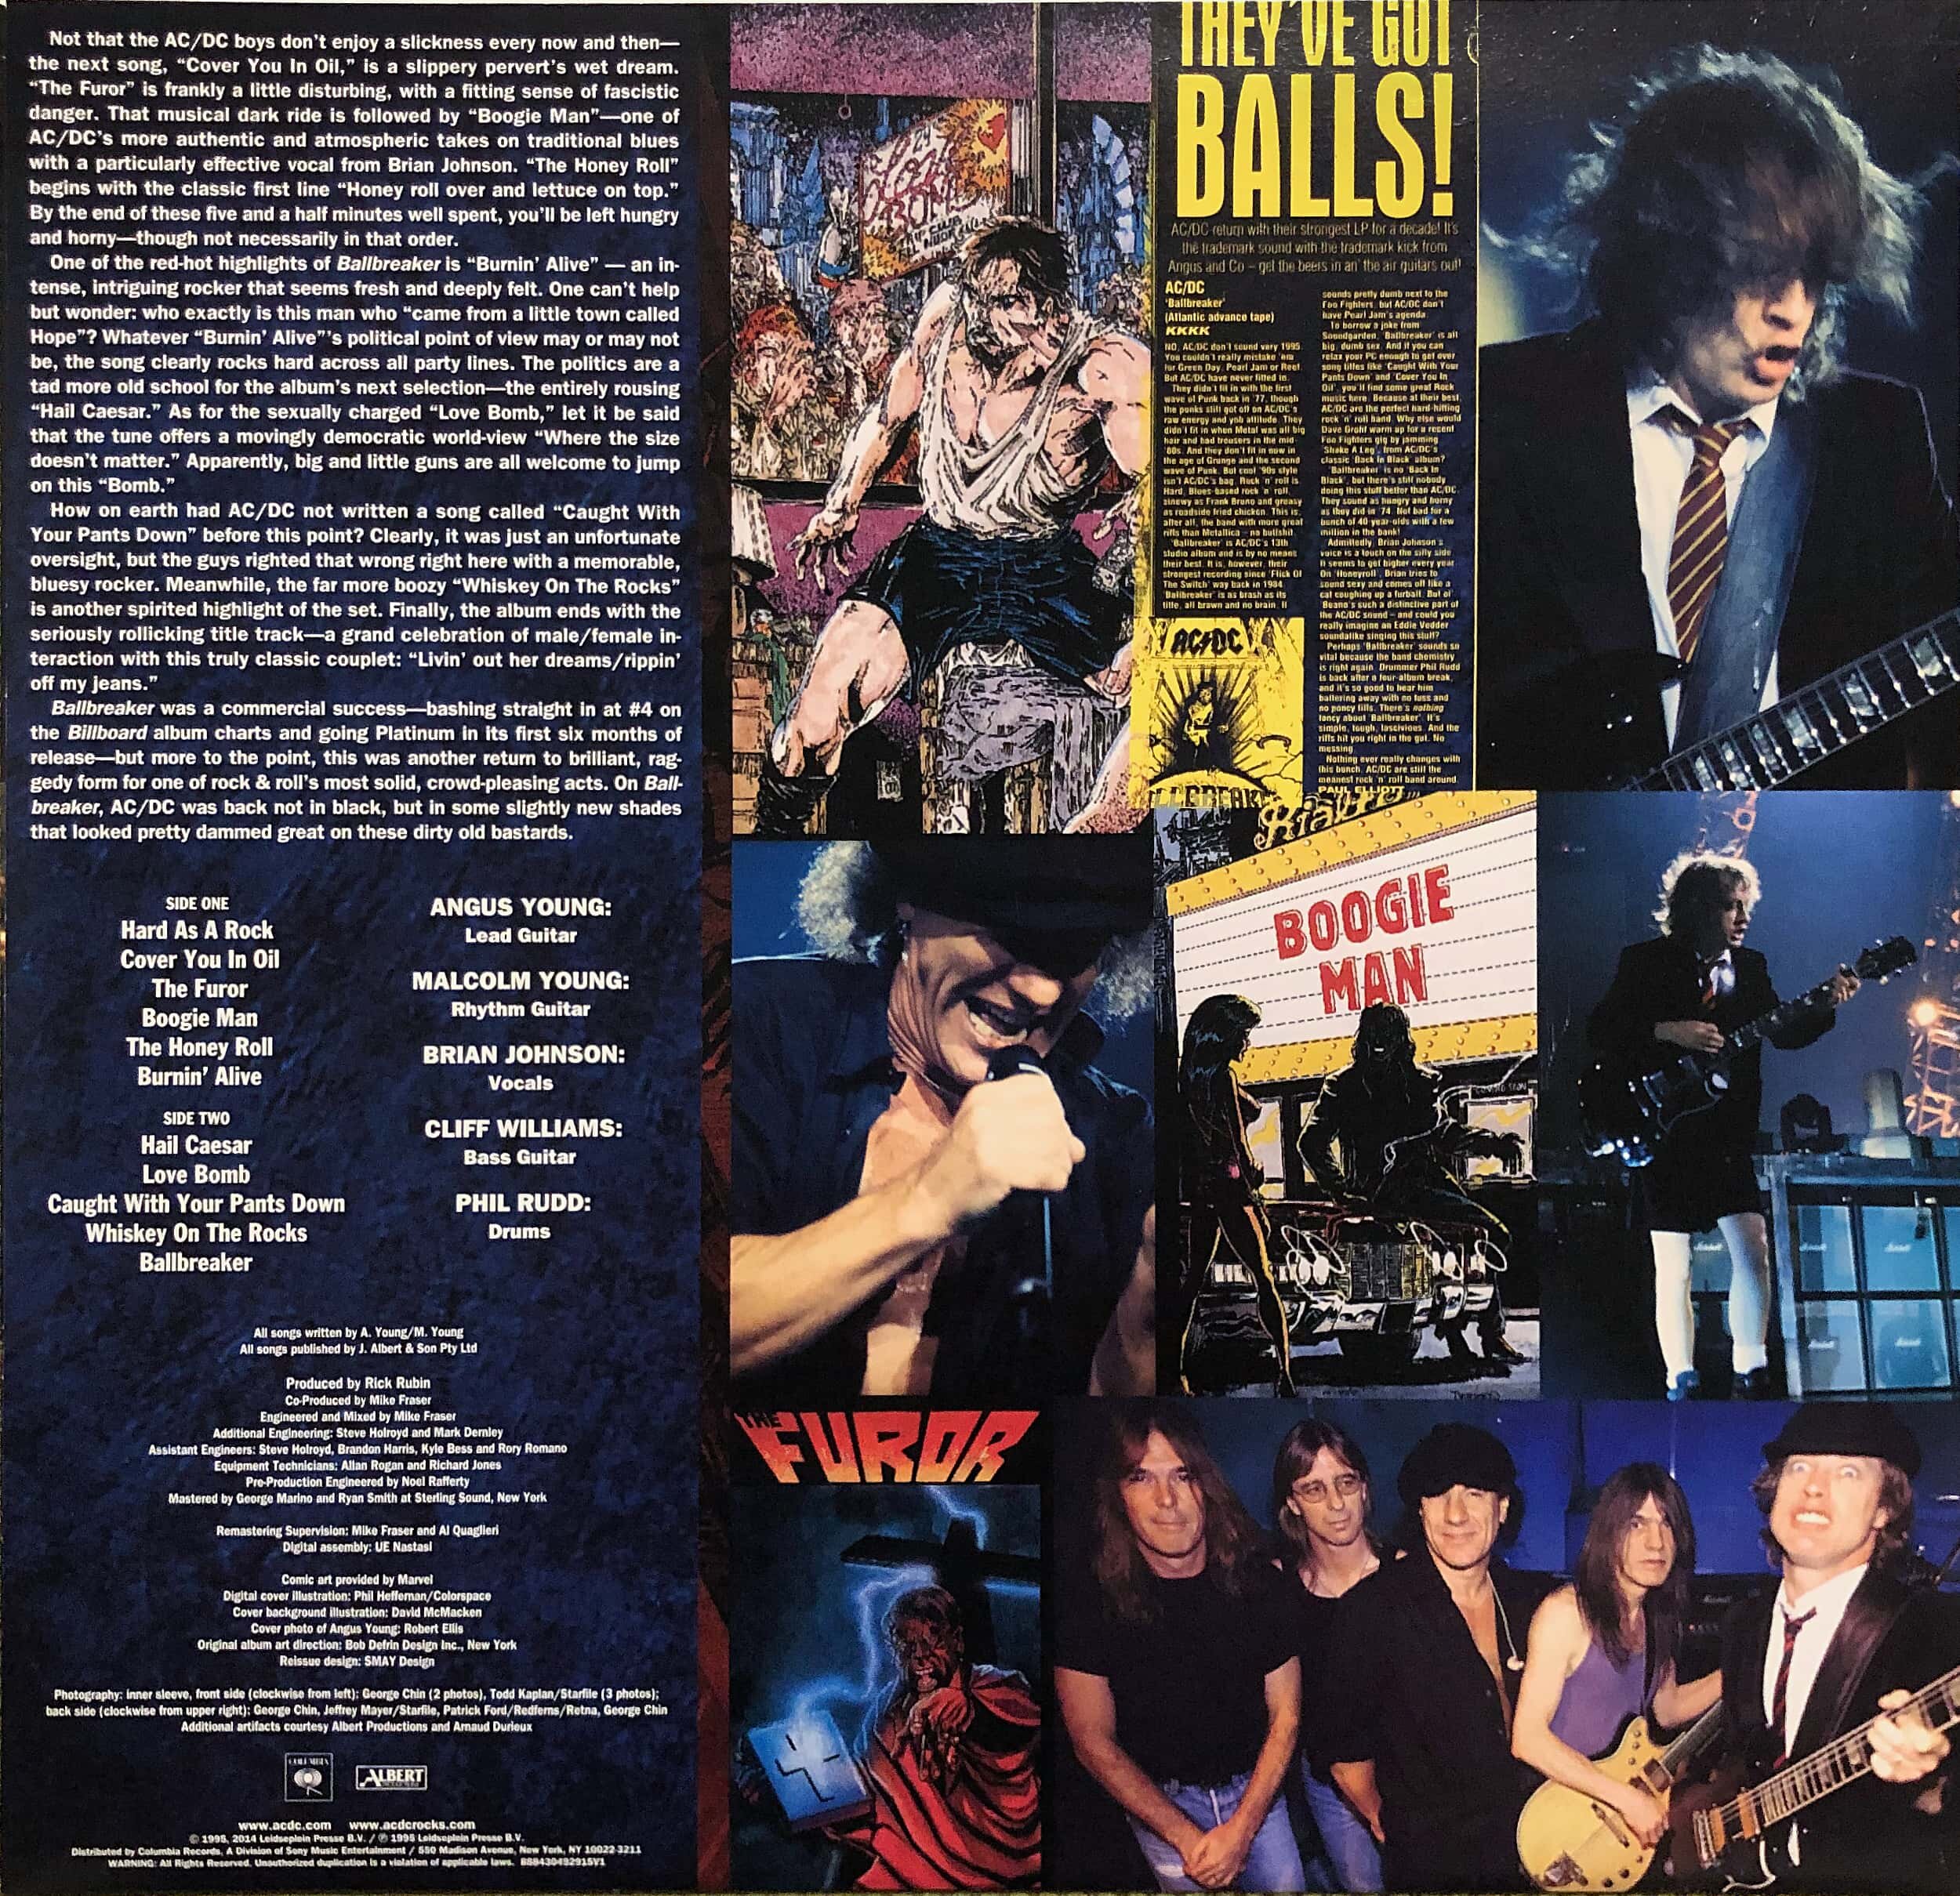 AC/DC – Ballbreaker (Album Review On Vinyl, CD, and Music) — Subjective